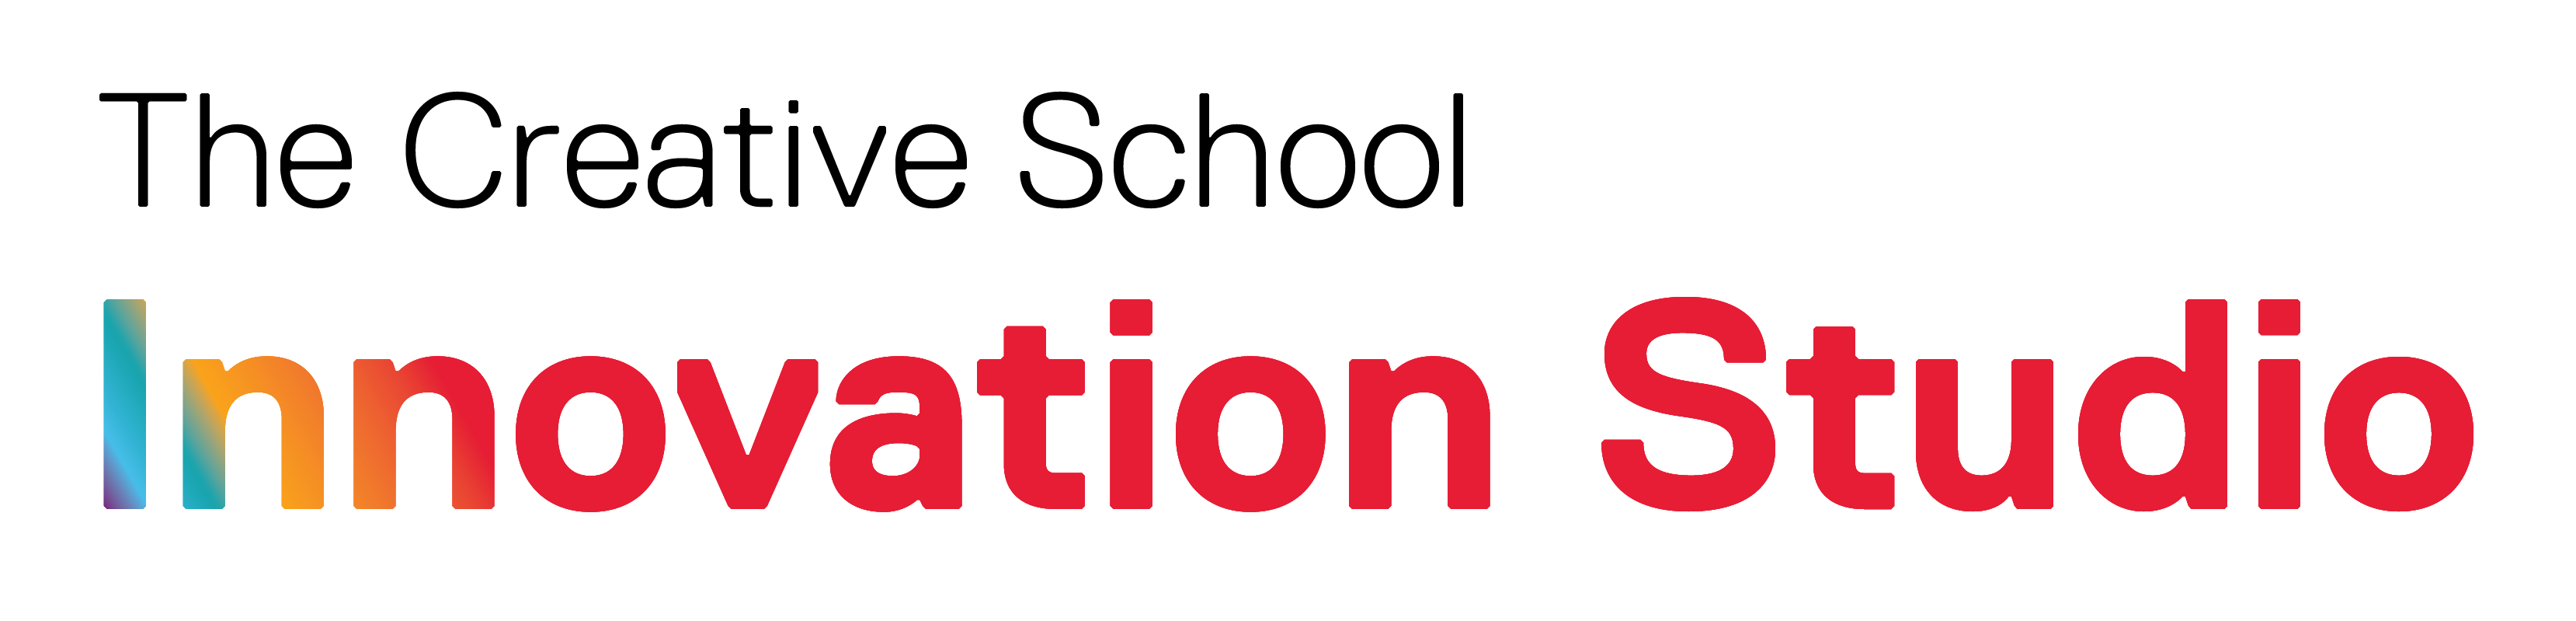 Innovation studio logo